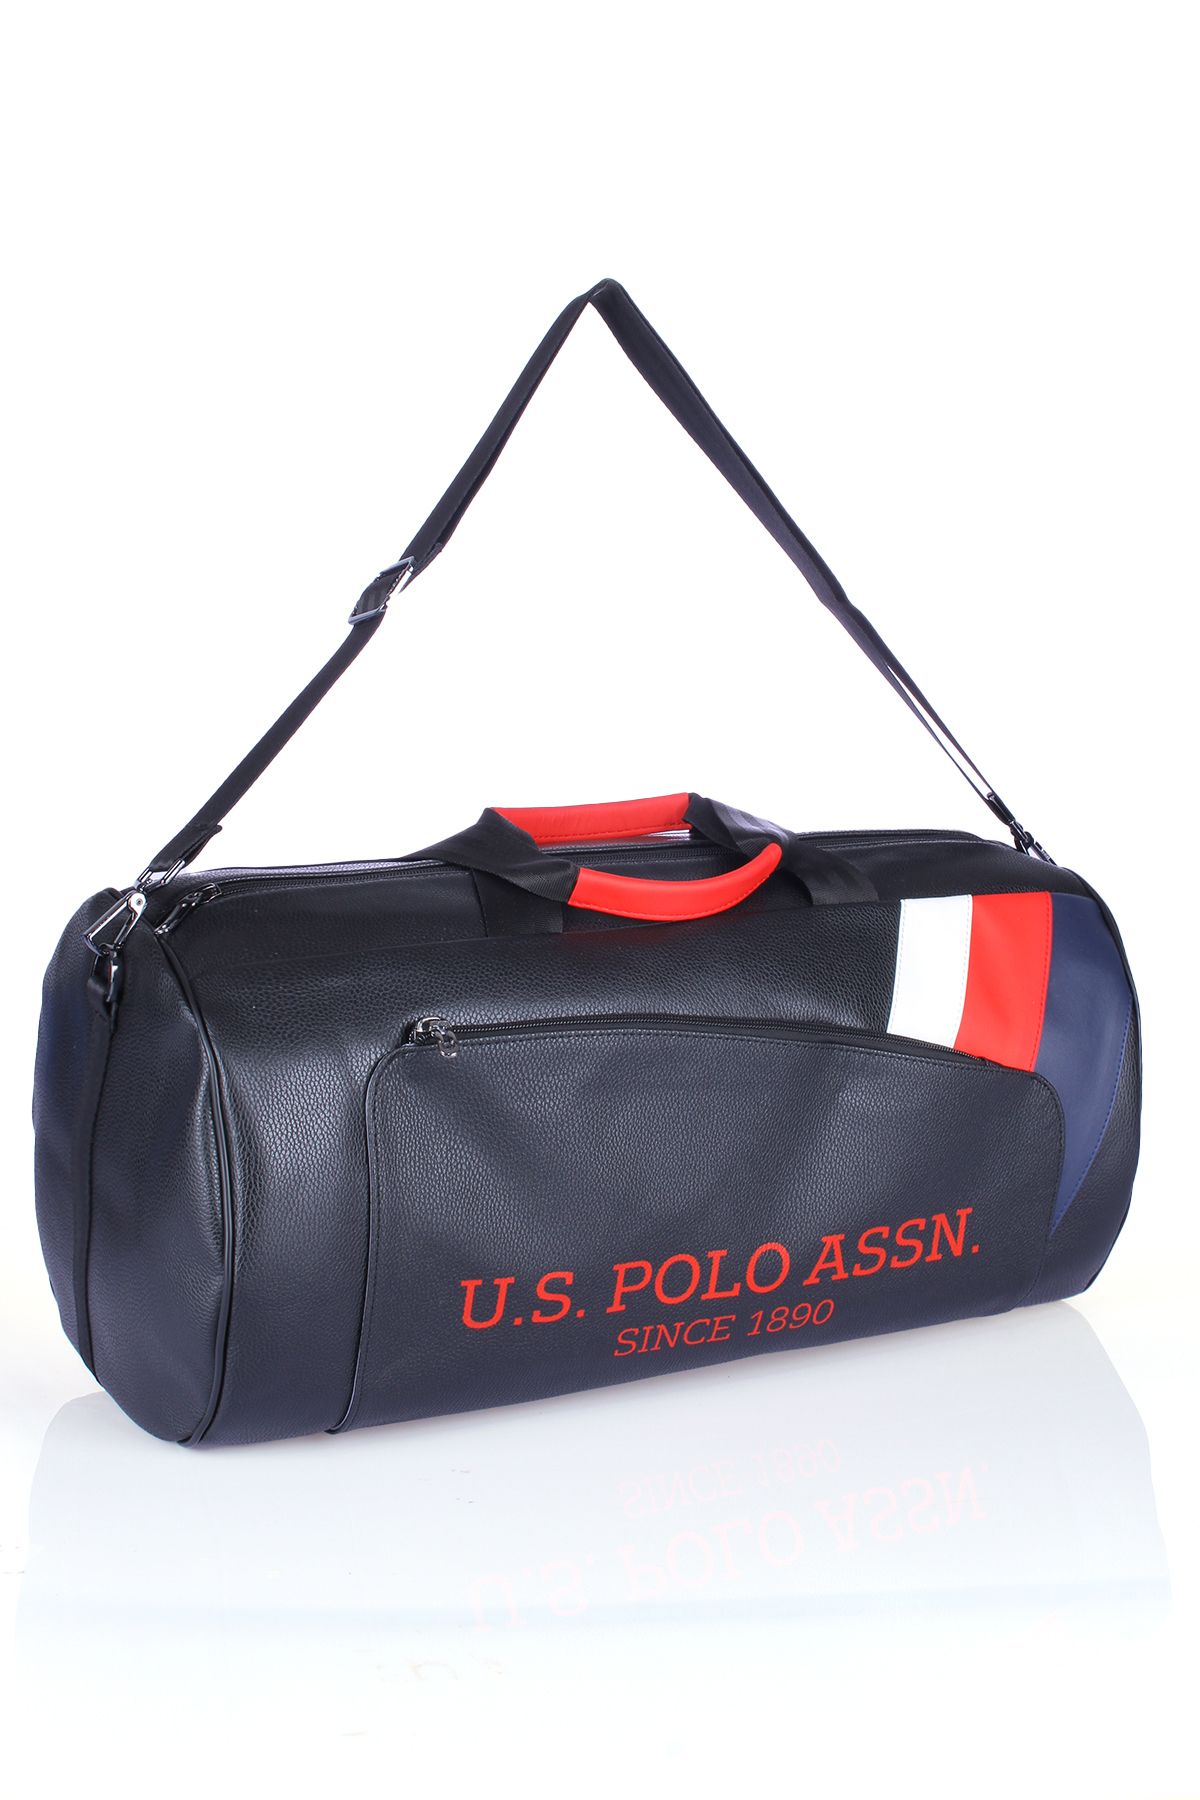 U.S. Polo Assn. Us Polo Assn 9501 Spor Çantası Silindir Valiz El Valizi Siyah